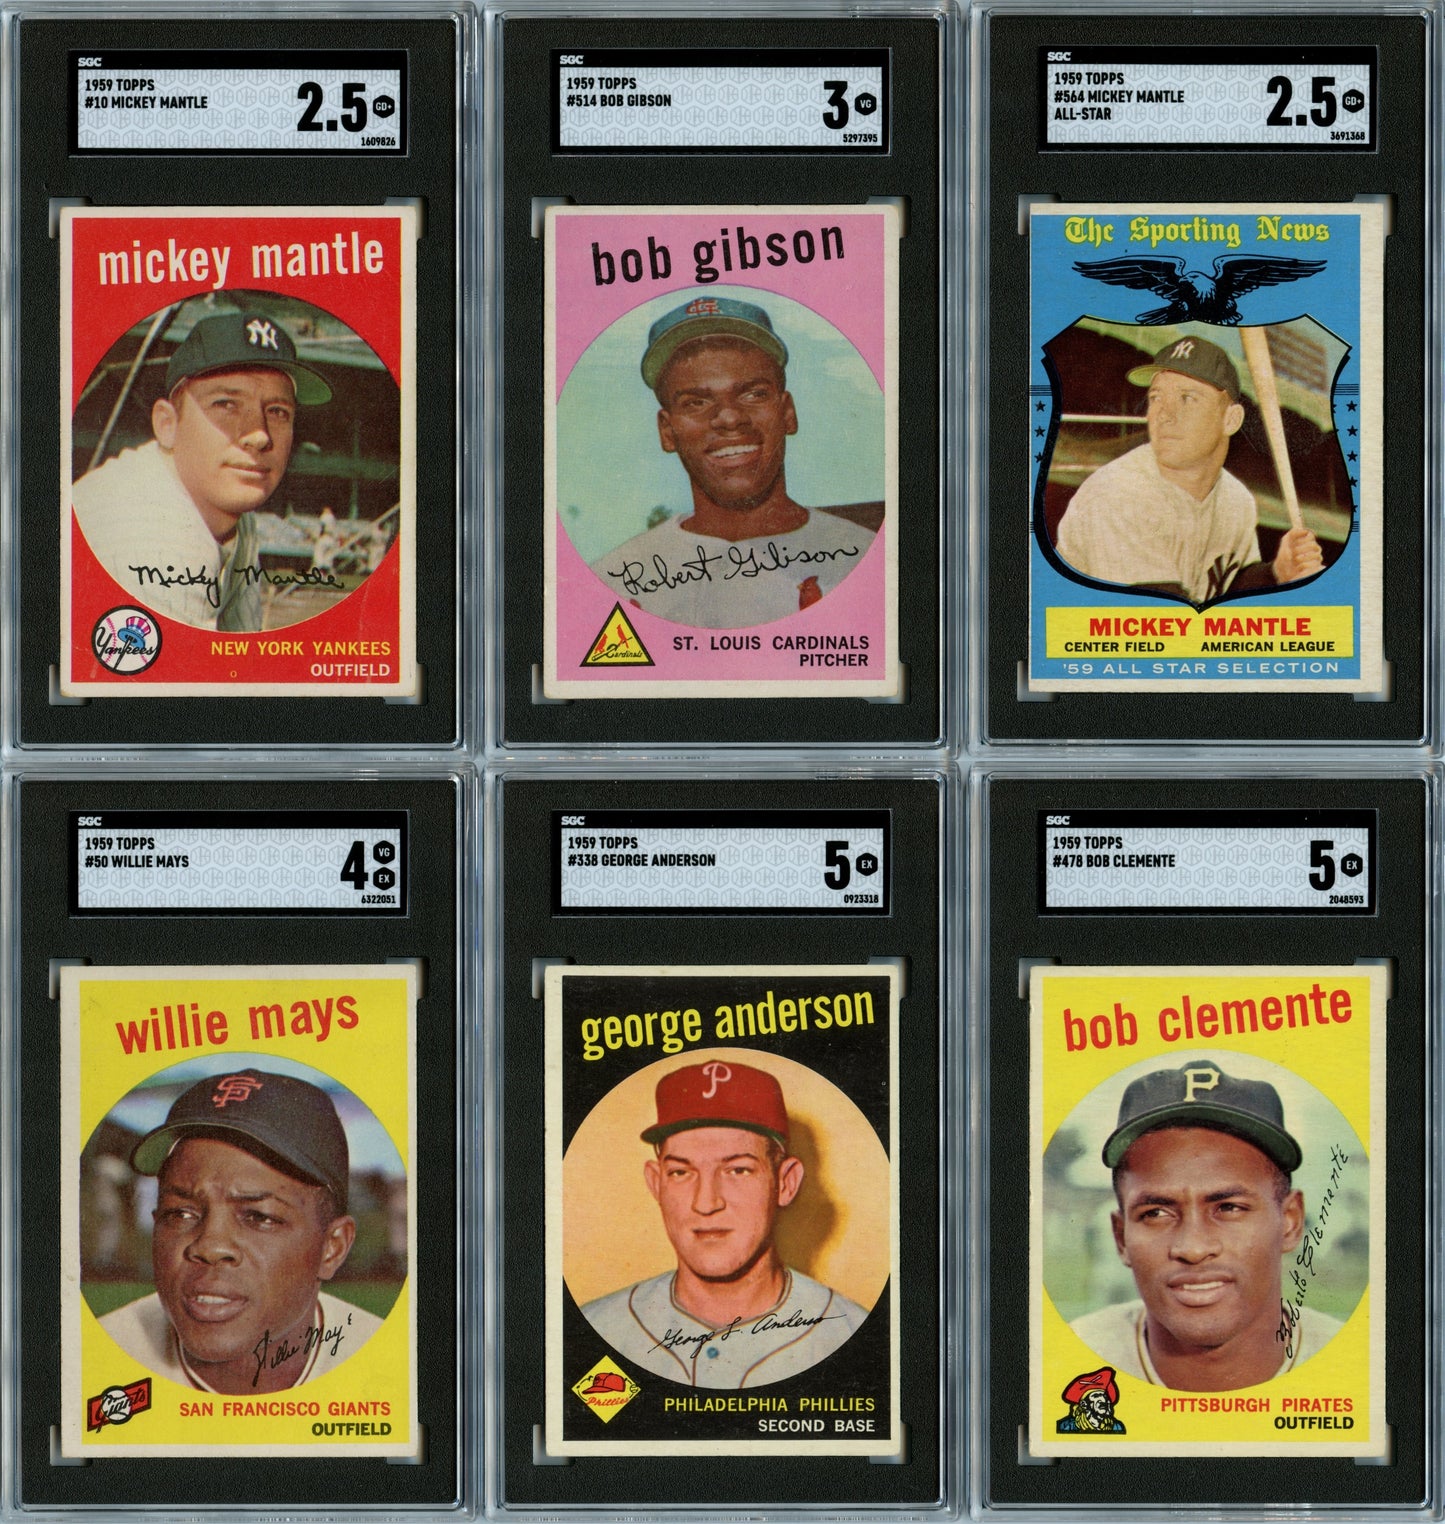 1959 Topps Baseball Complete Set Break 572 Spot Random Card (Bob Gibson Rookie SGC 3, Mickey Mantle SGC 2.5, Mickey Mantle All-Star SGC 2.5, Willie Mays SGC 4, Roberto Clemente SGC 5, etc.!)